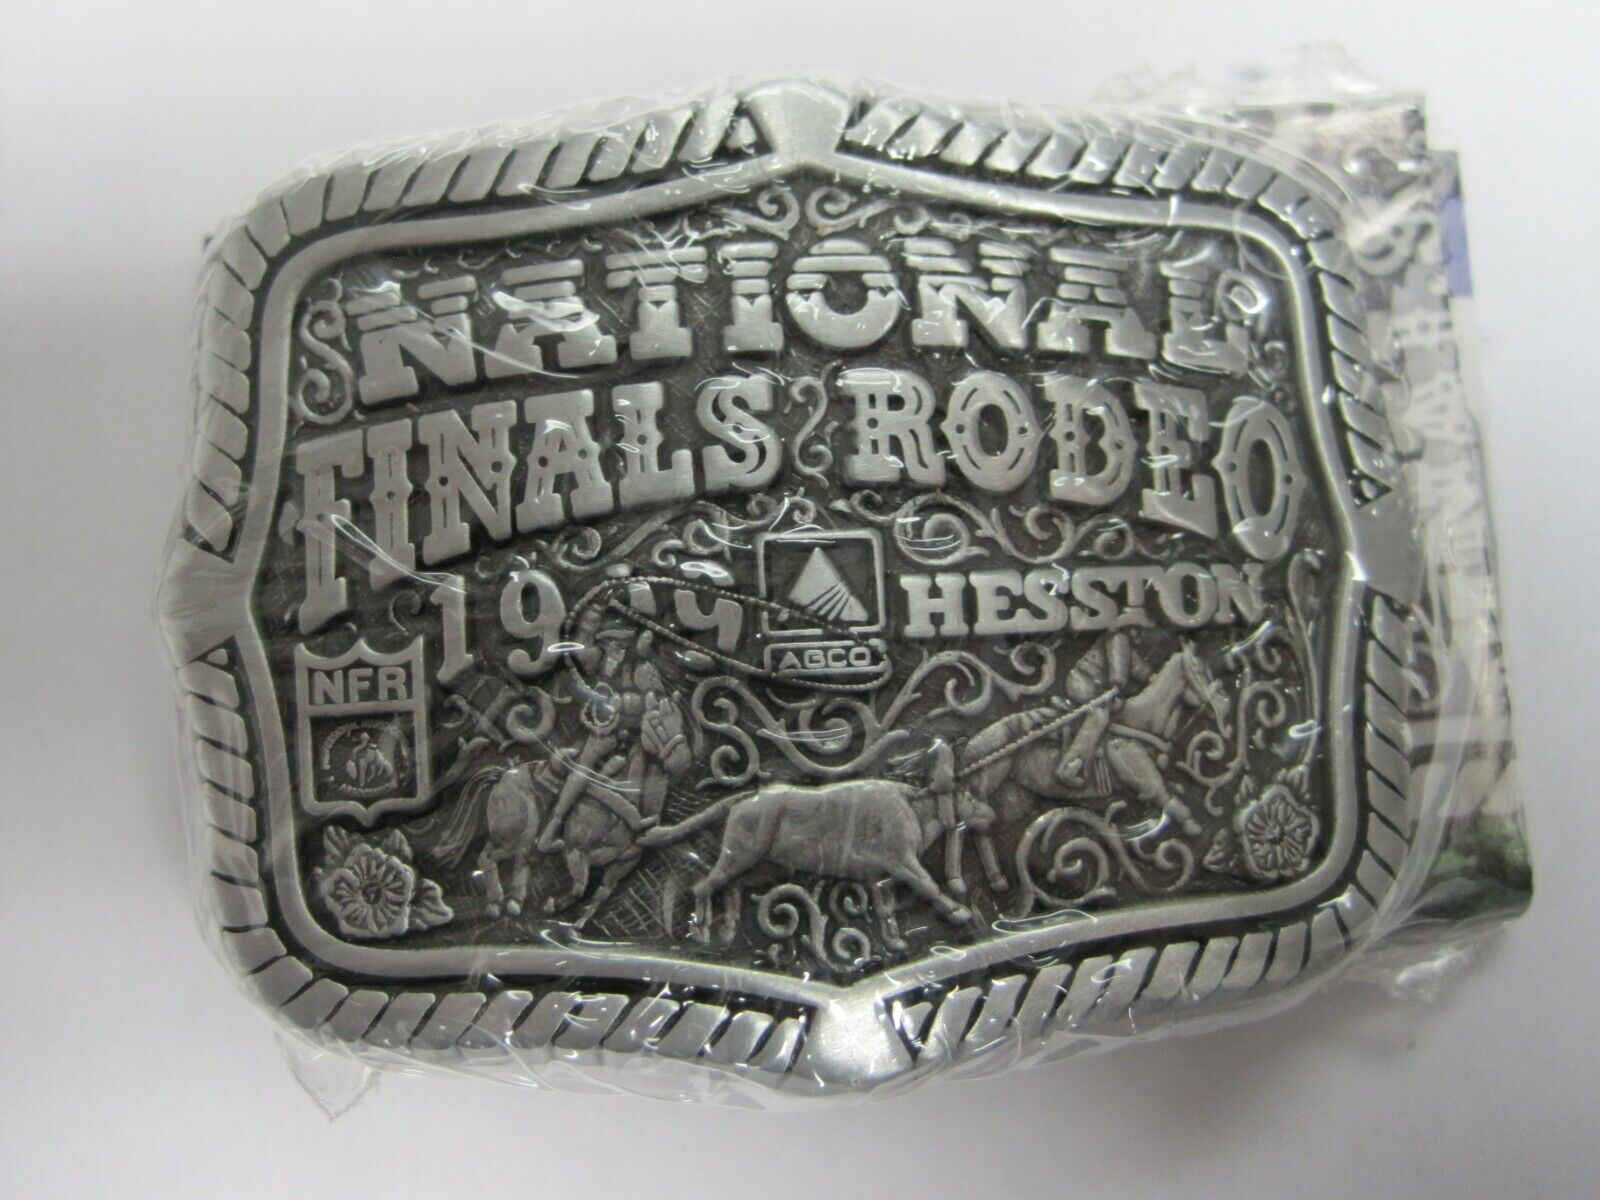  National Finals Rodeo Hesston 1999 NFR Youth Cowboy Buckle, Vintage, Orig. Pkg.